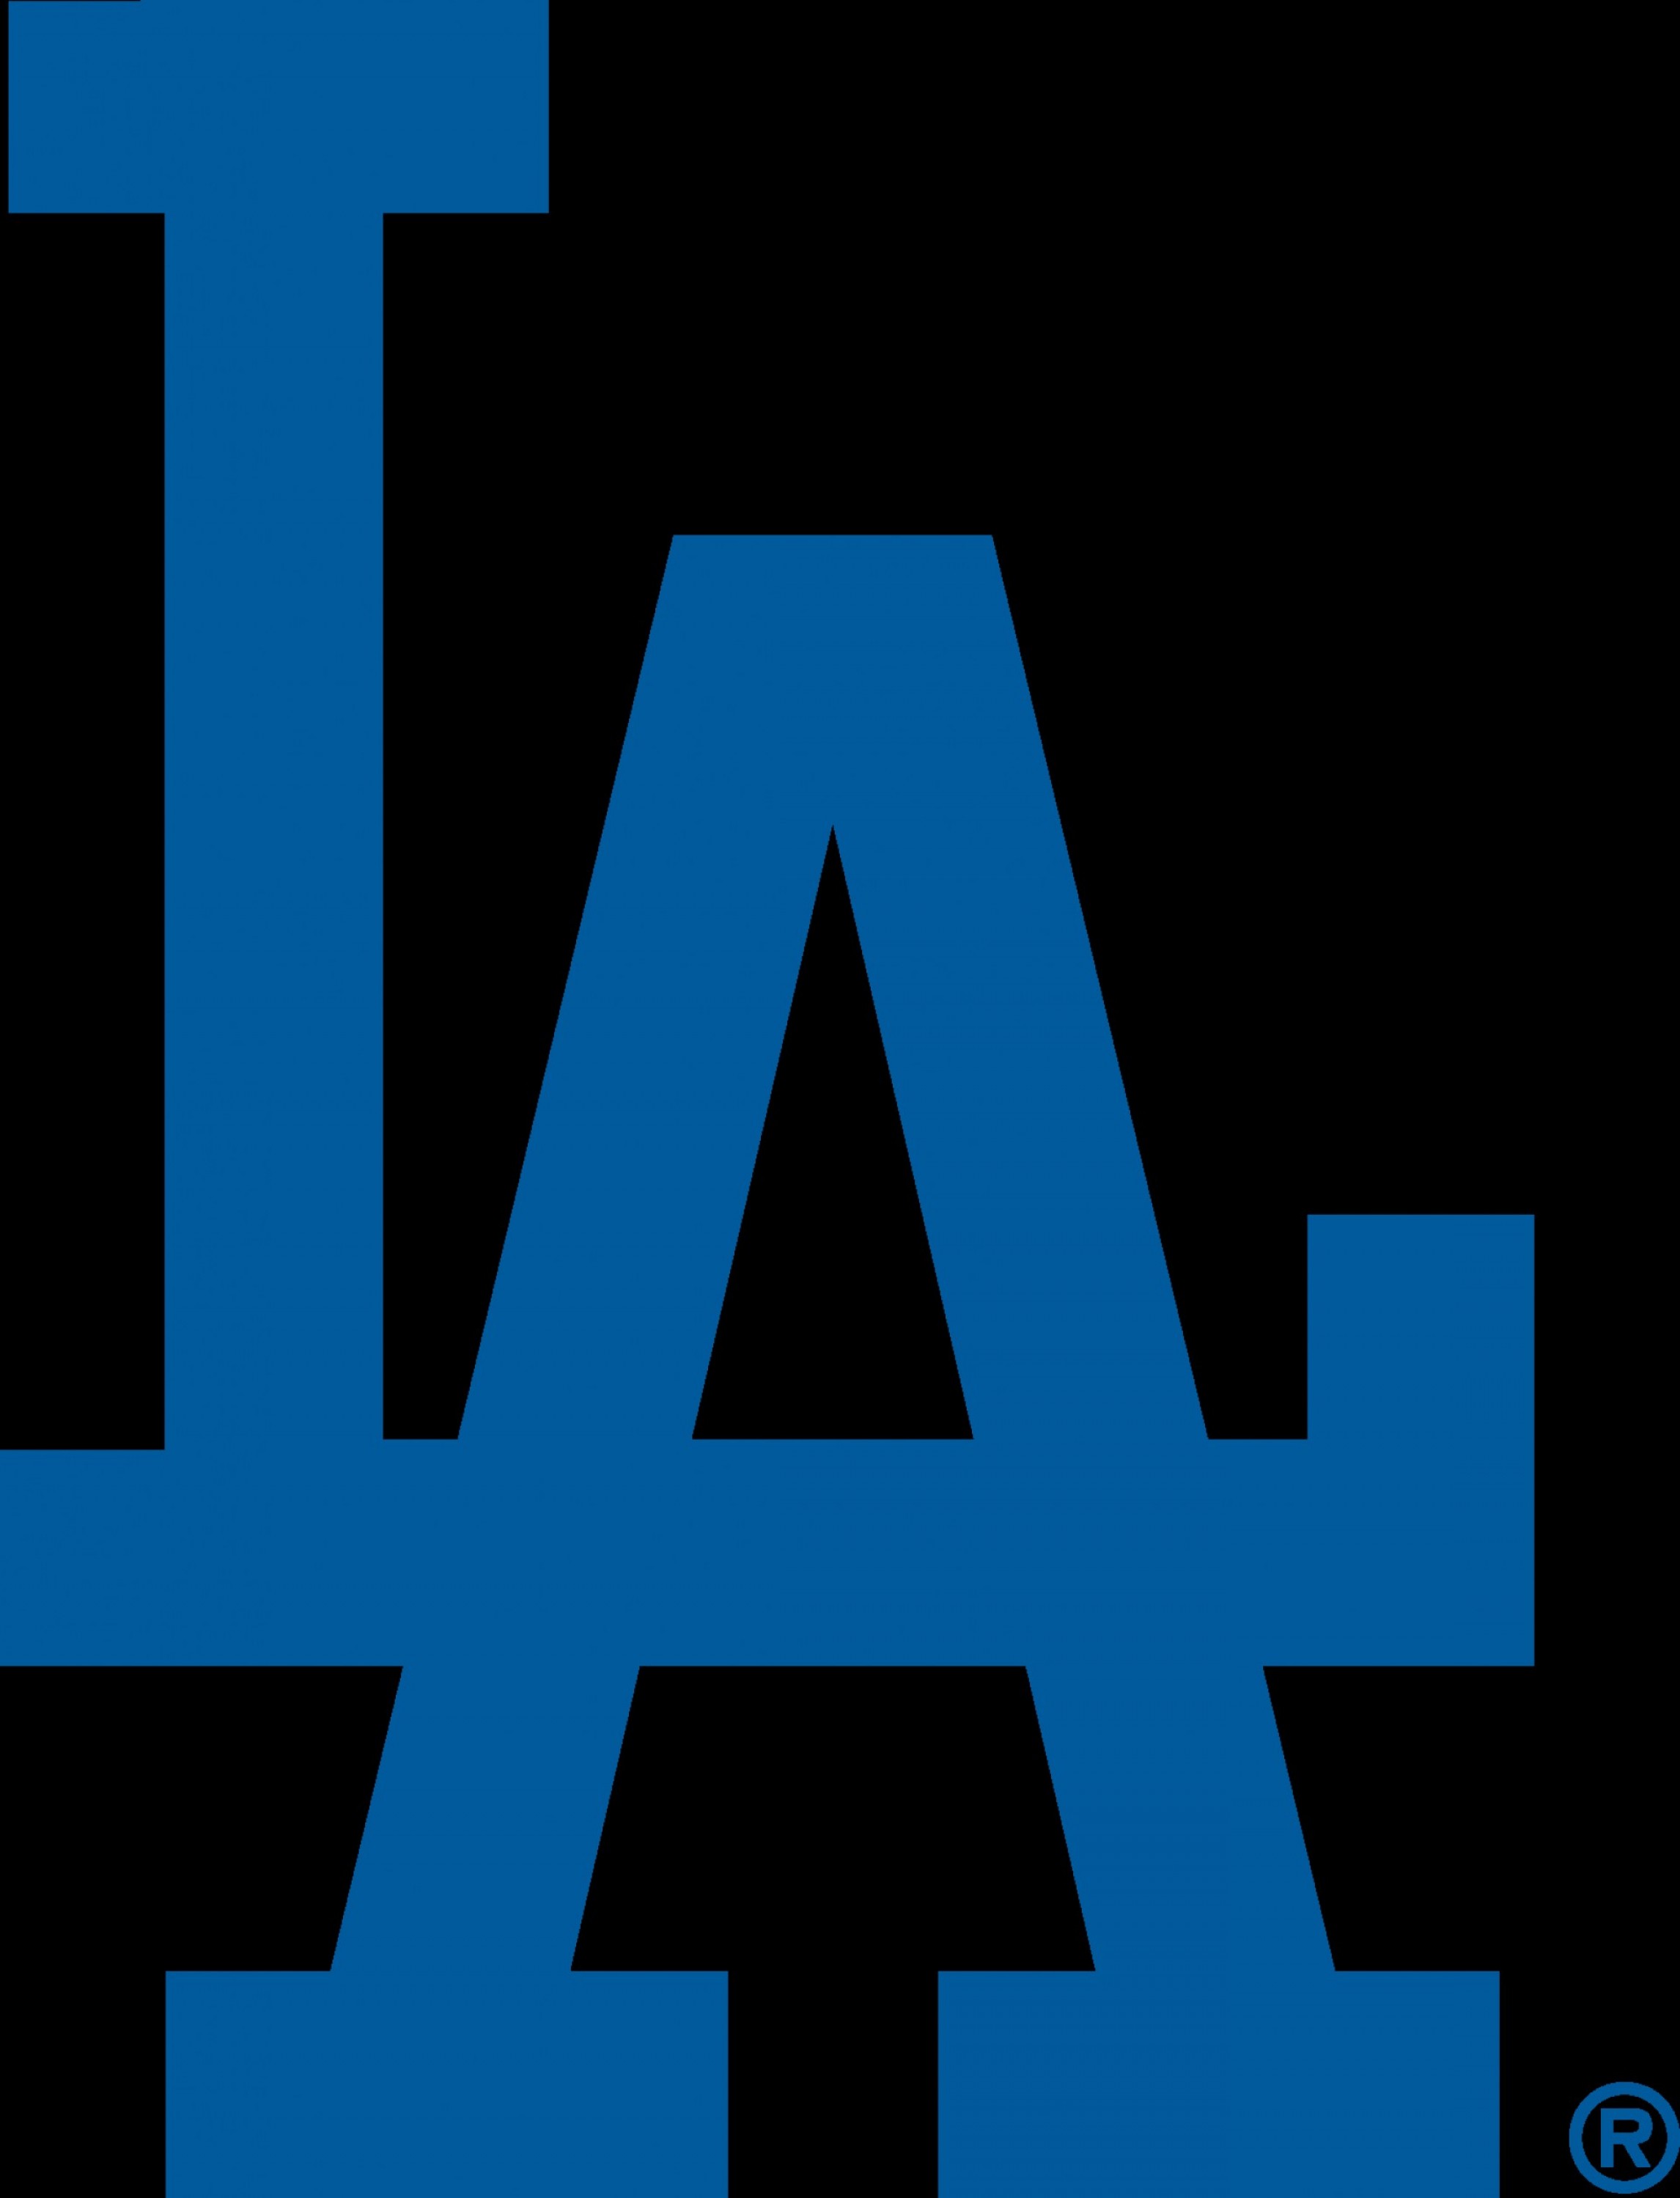 Download La Dodgers Logo Vector at Vectorified.com | Collection of ...